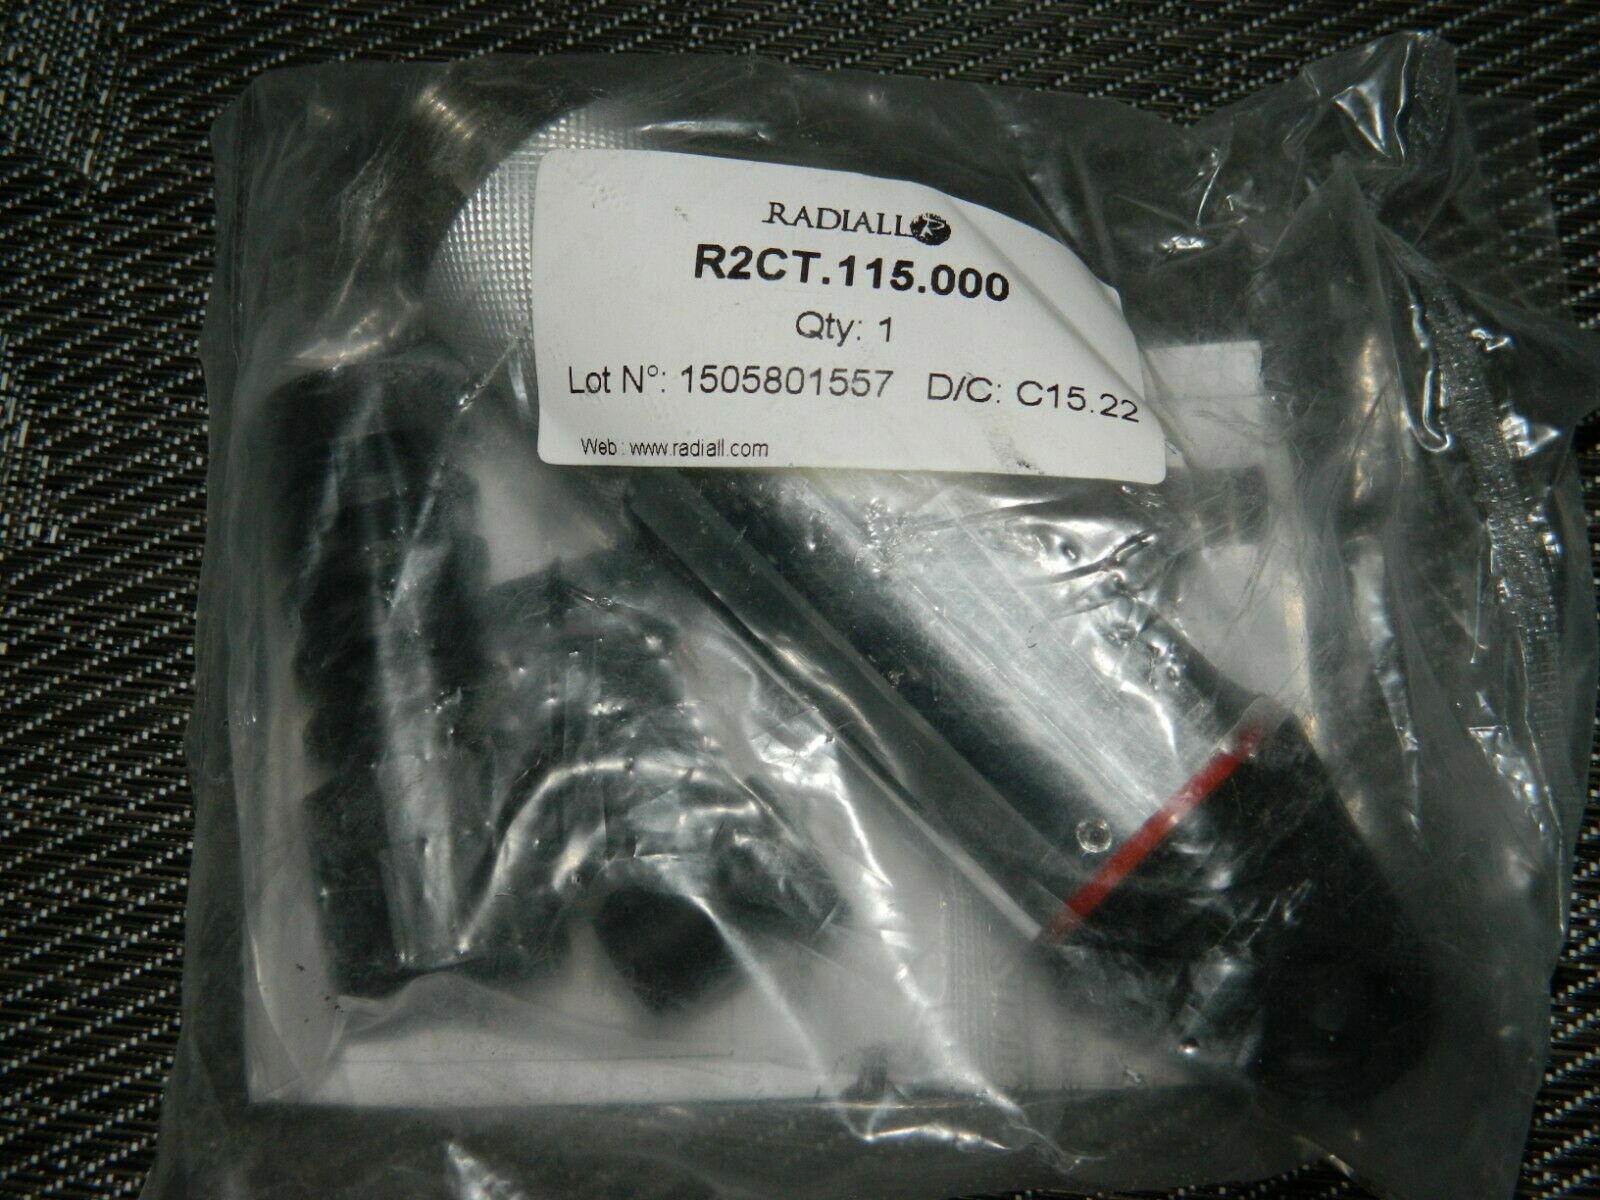 New Commscope Andrew Fa-r2ct Fiber Cord Plug Kit R299.988.001 / 474384a.101